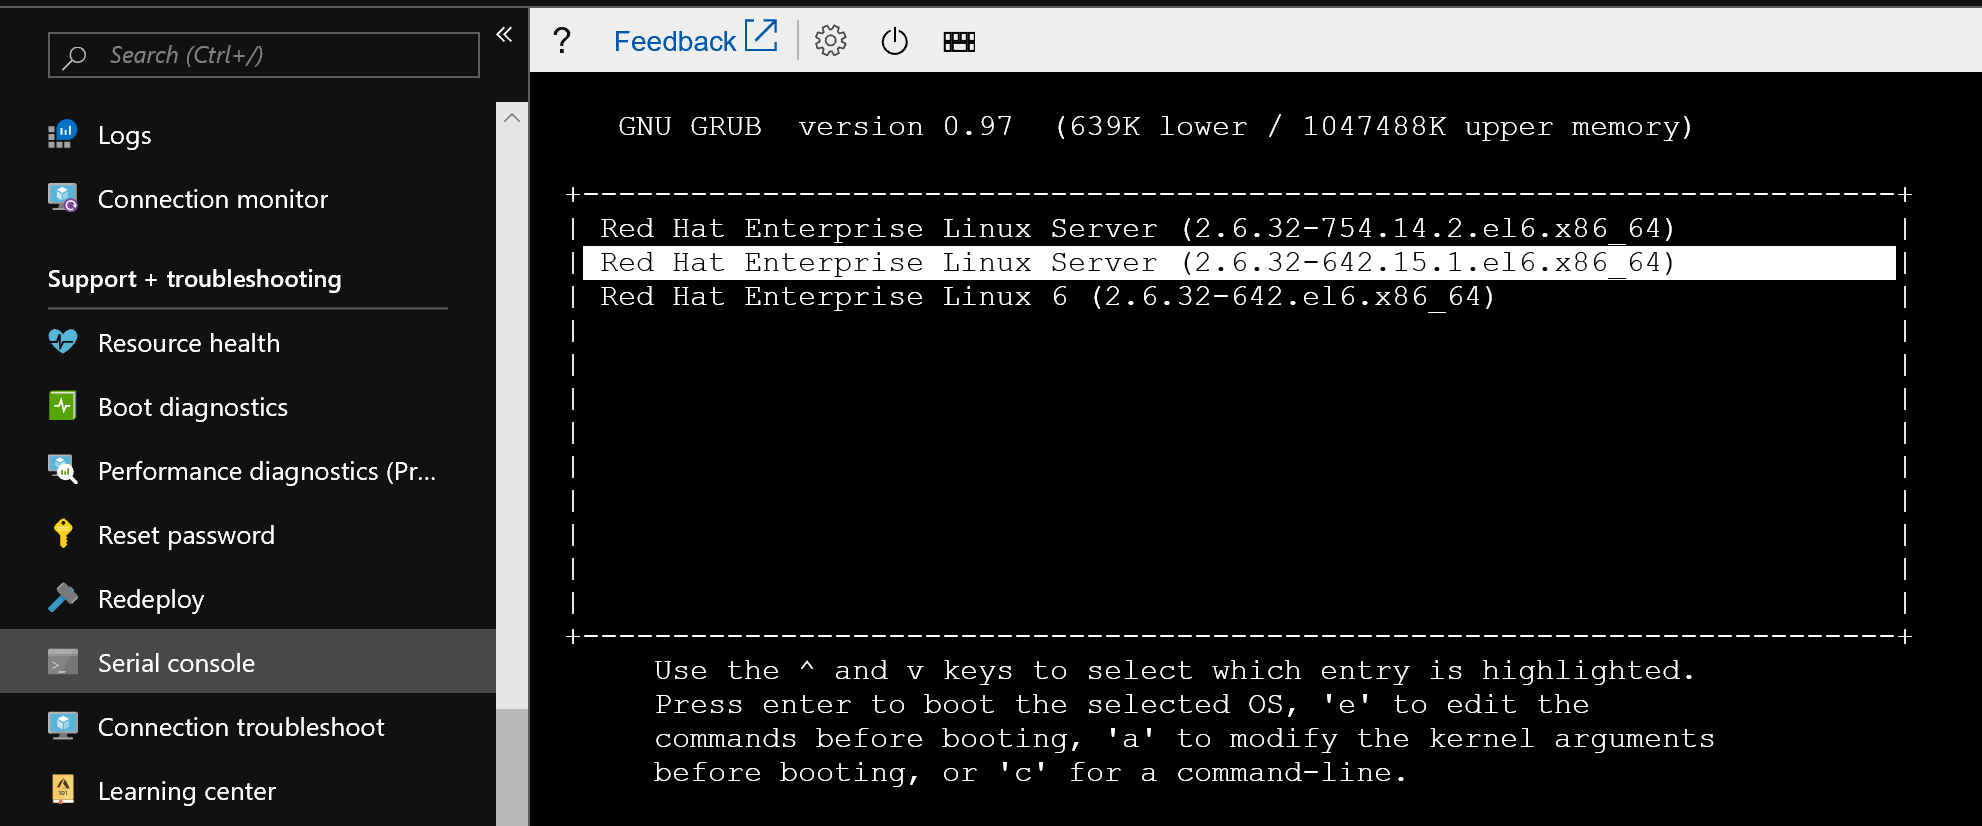 Captura de pantalla de la pantalla de arranque del SO seleccionado en GRUB, que muestra que se pueden elegir múltiples kernels.